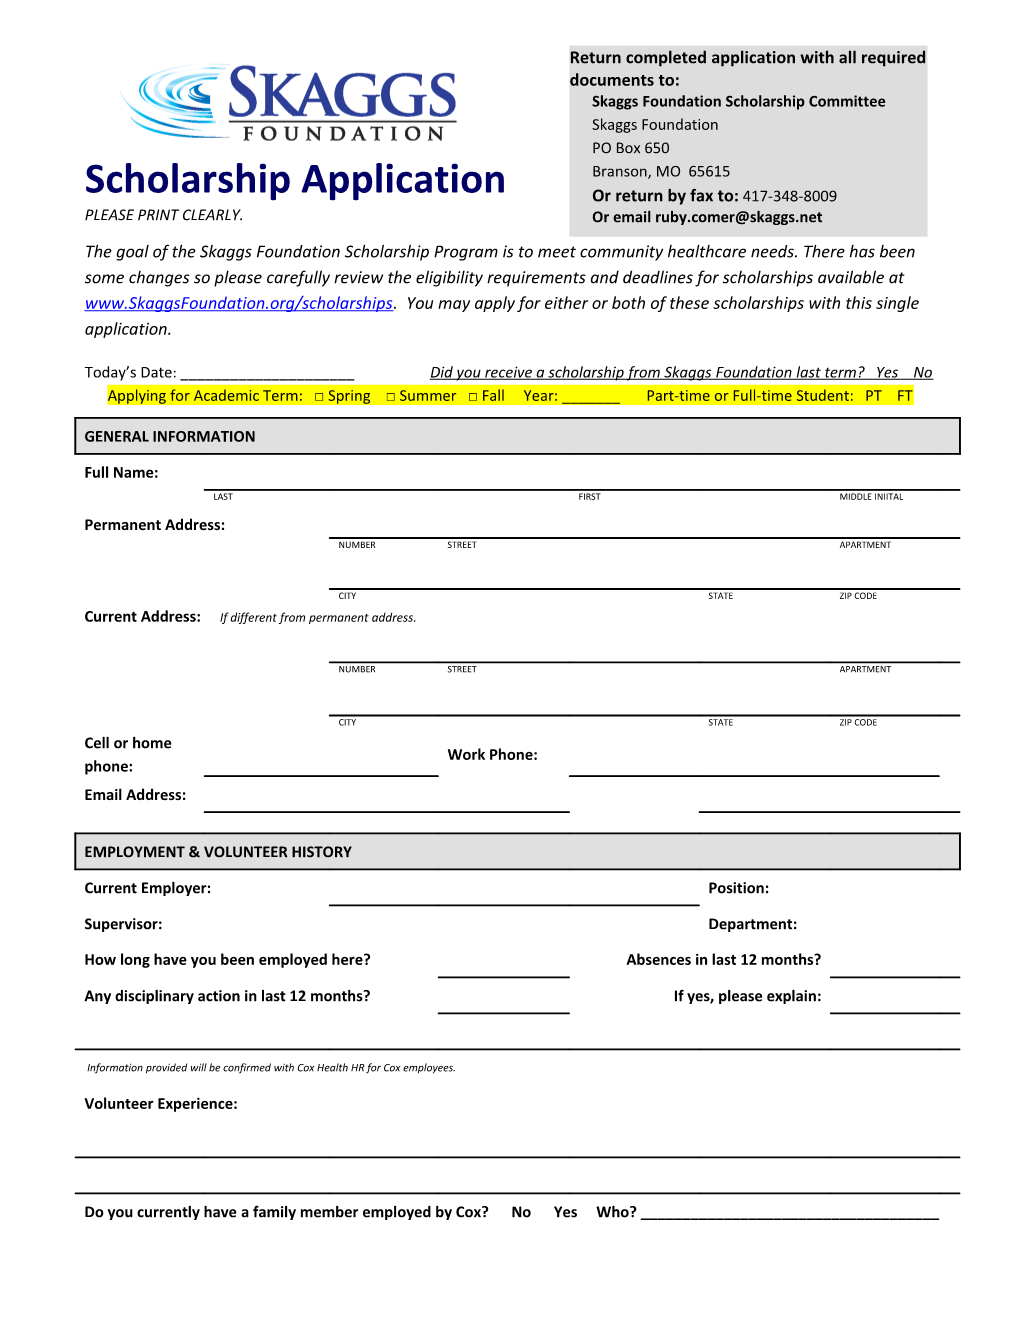 Scholarship Application s9